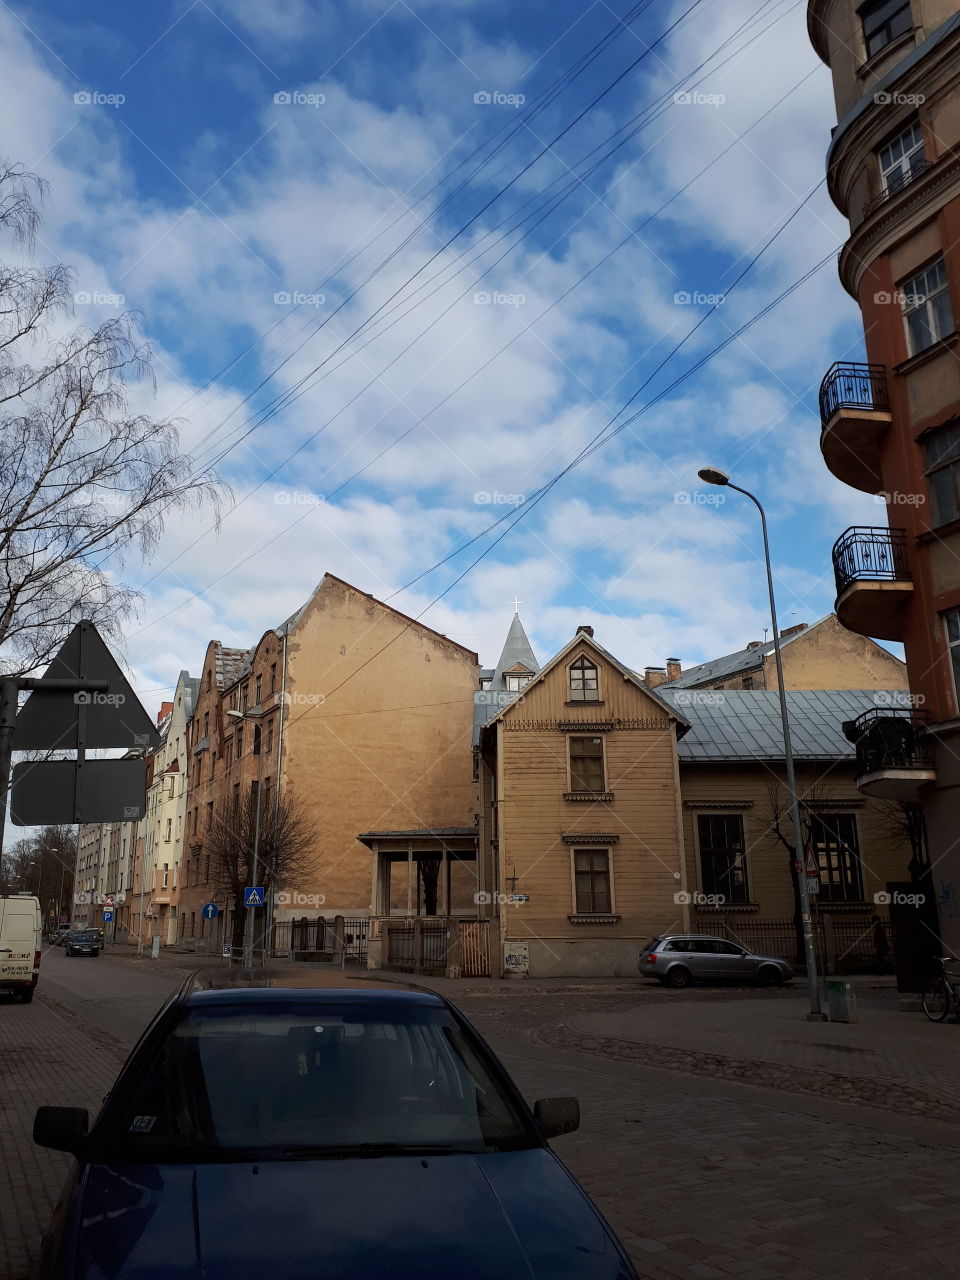 Street photography, old church, blue sky